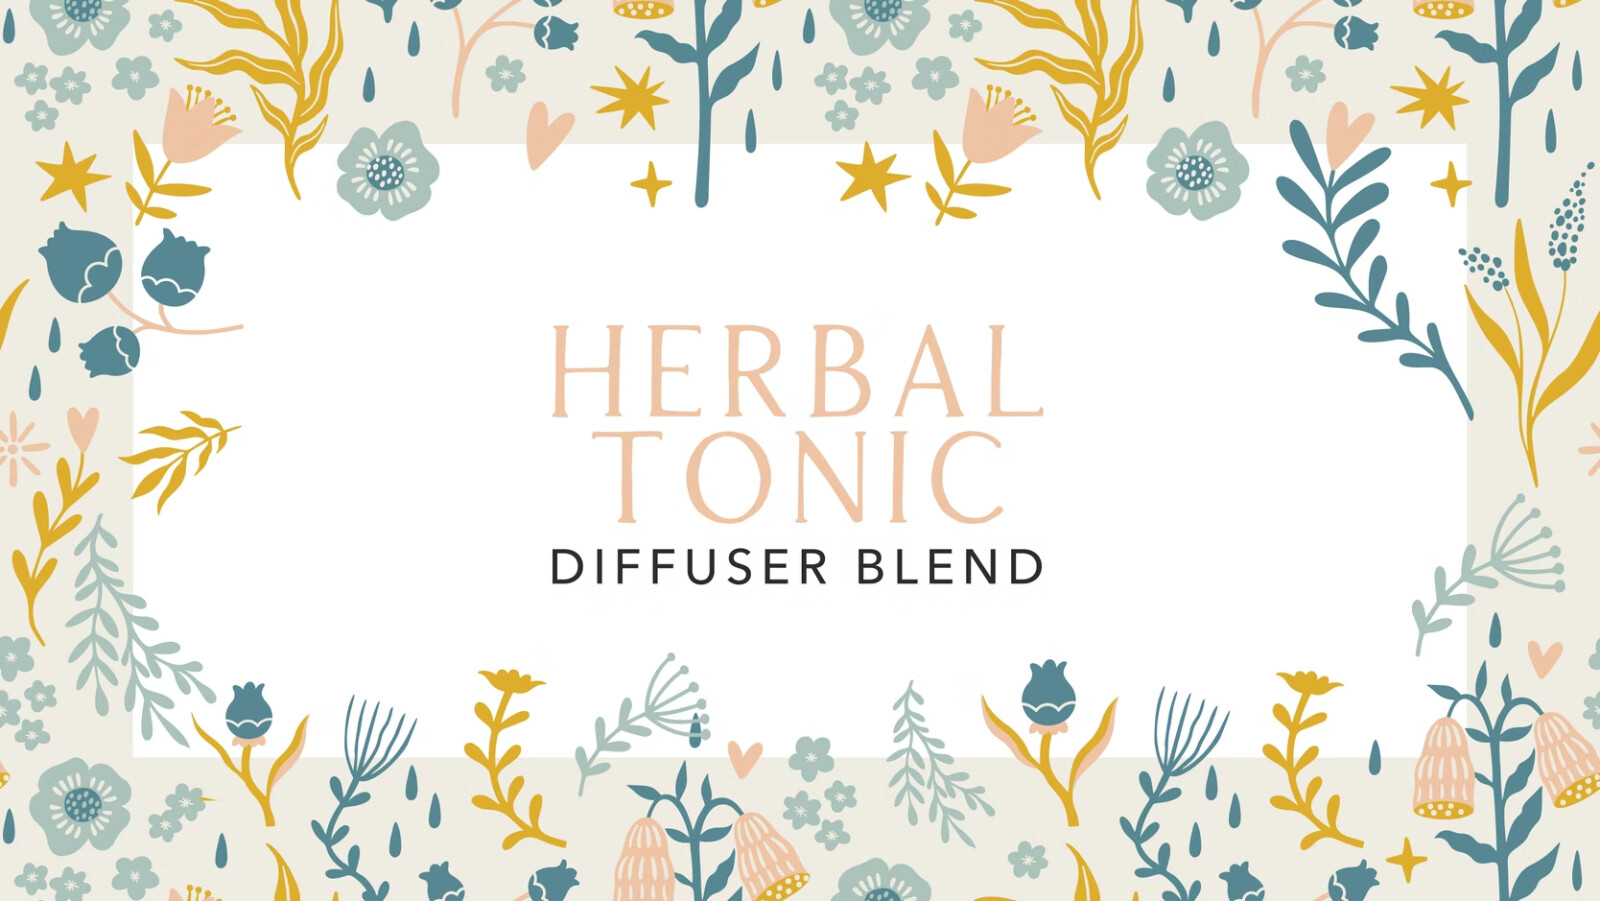 Herbal Tonic Diffuser Blend